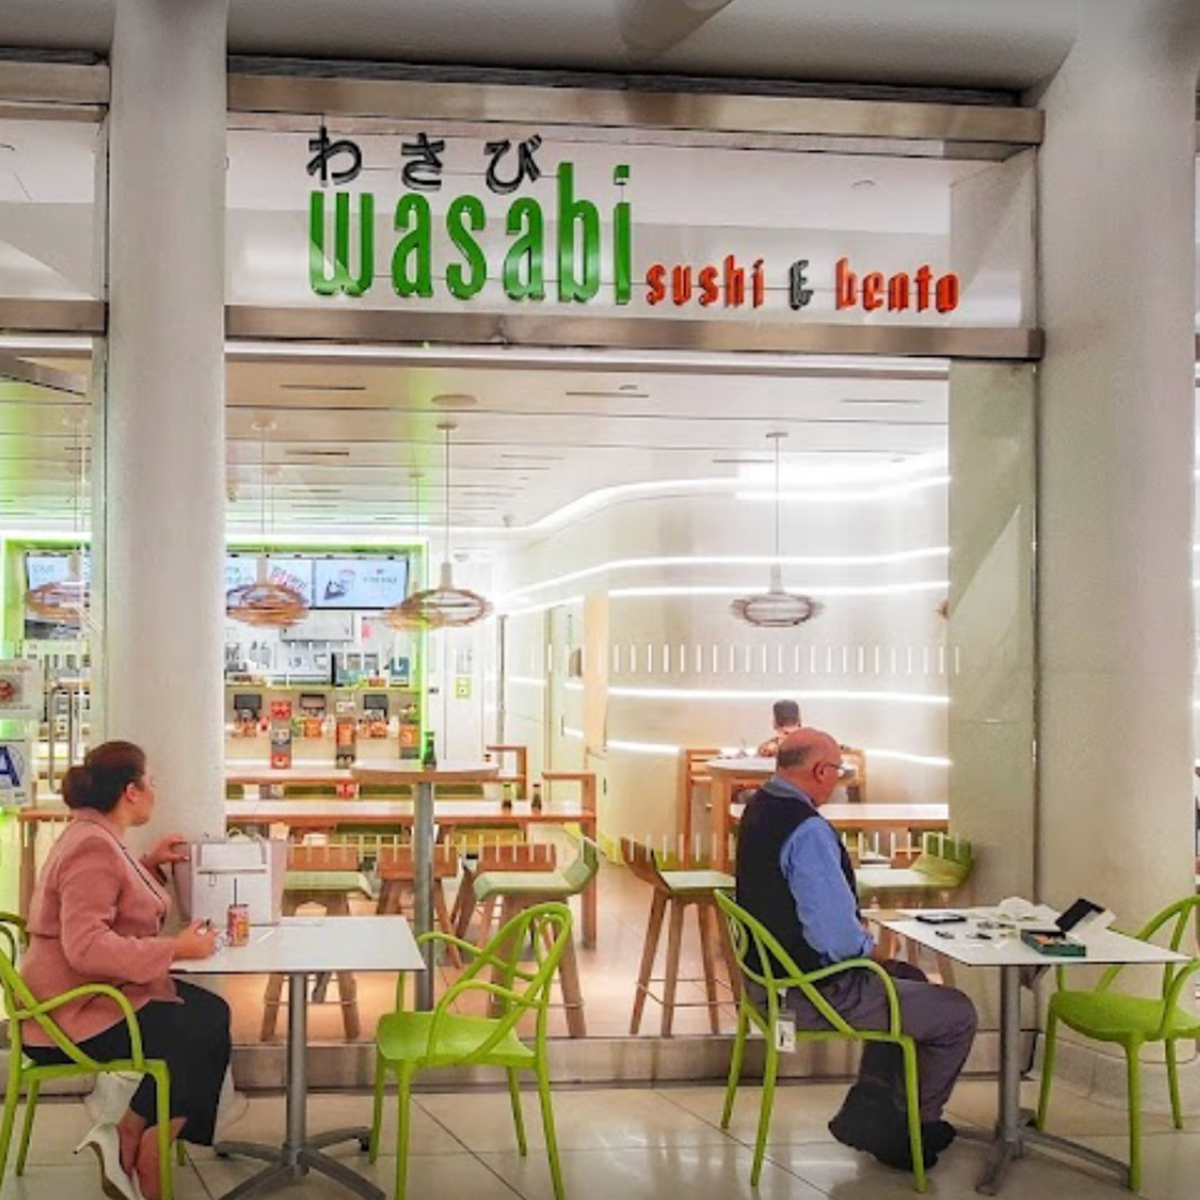 Wasabi Sushi & Bento World Trade Center New York